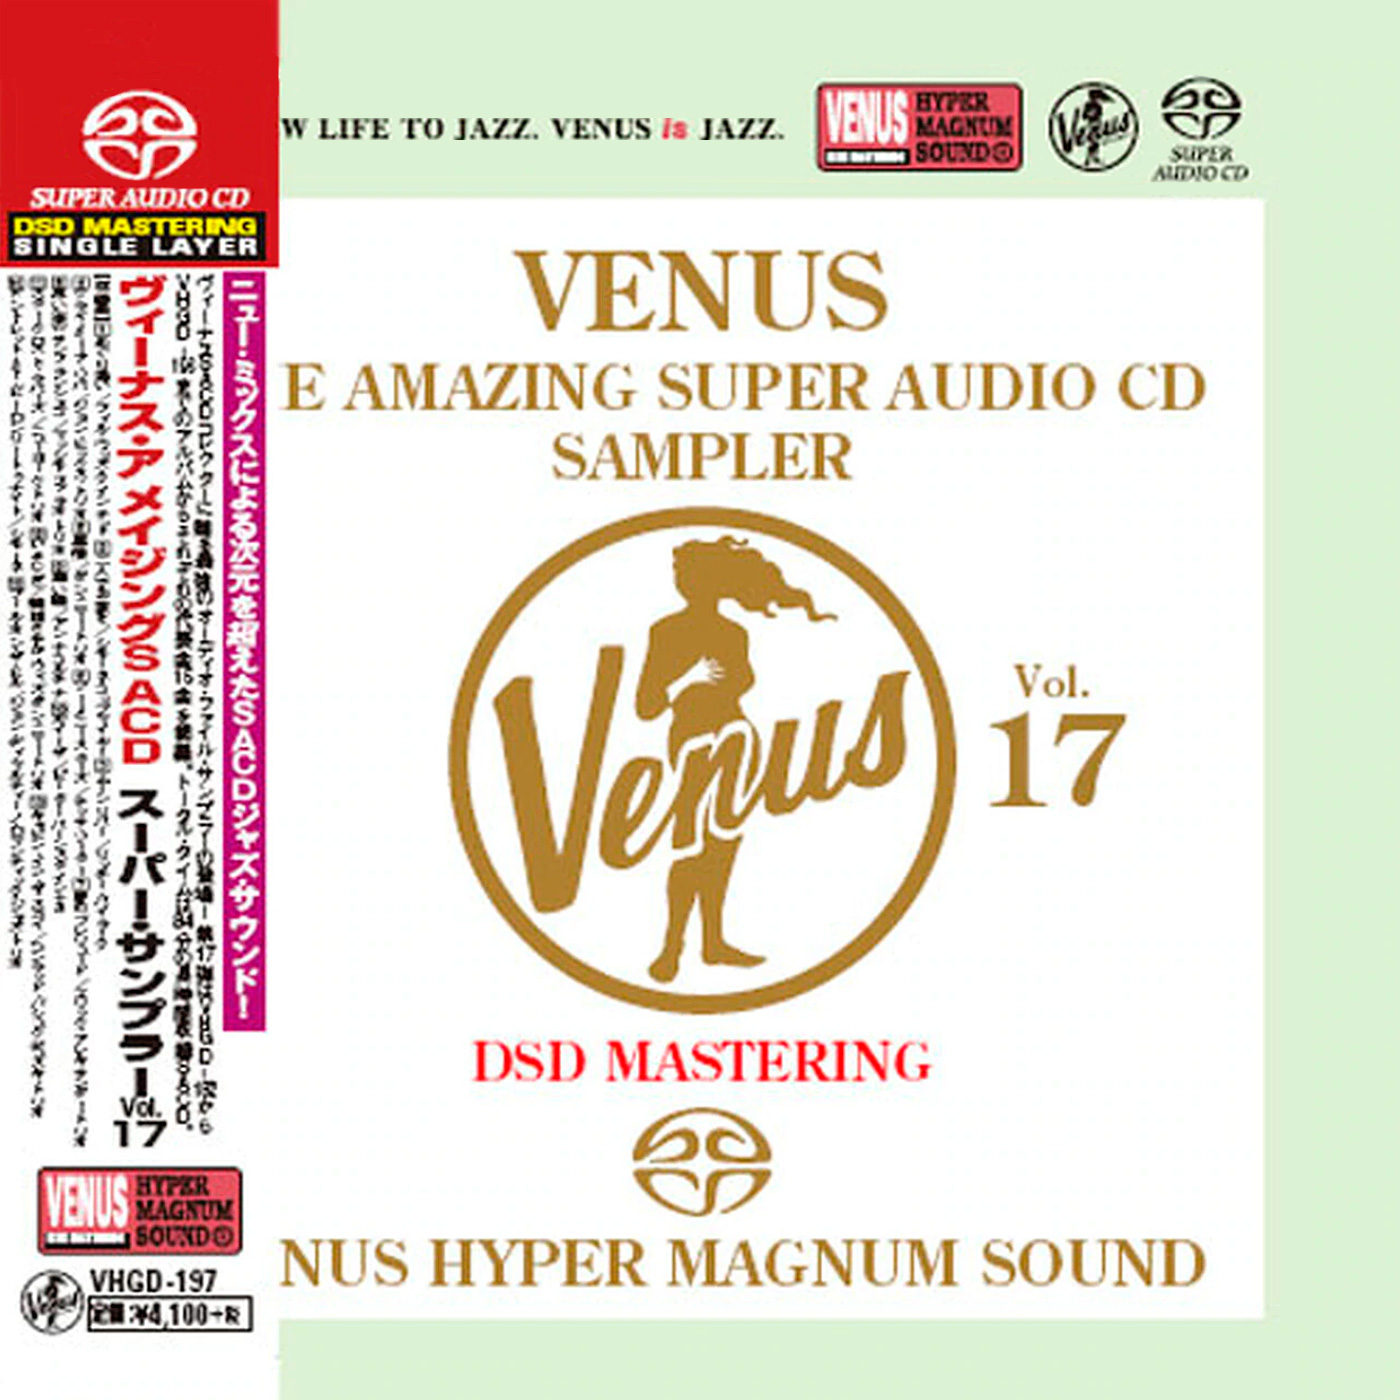 Various Artists – Venus: The Amazing Super Audio CD Sampler Vol.17 (2017) [Japan] SACD ISO + DSF DSD64 + Hi-Res FLAC